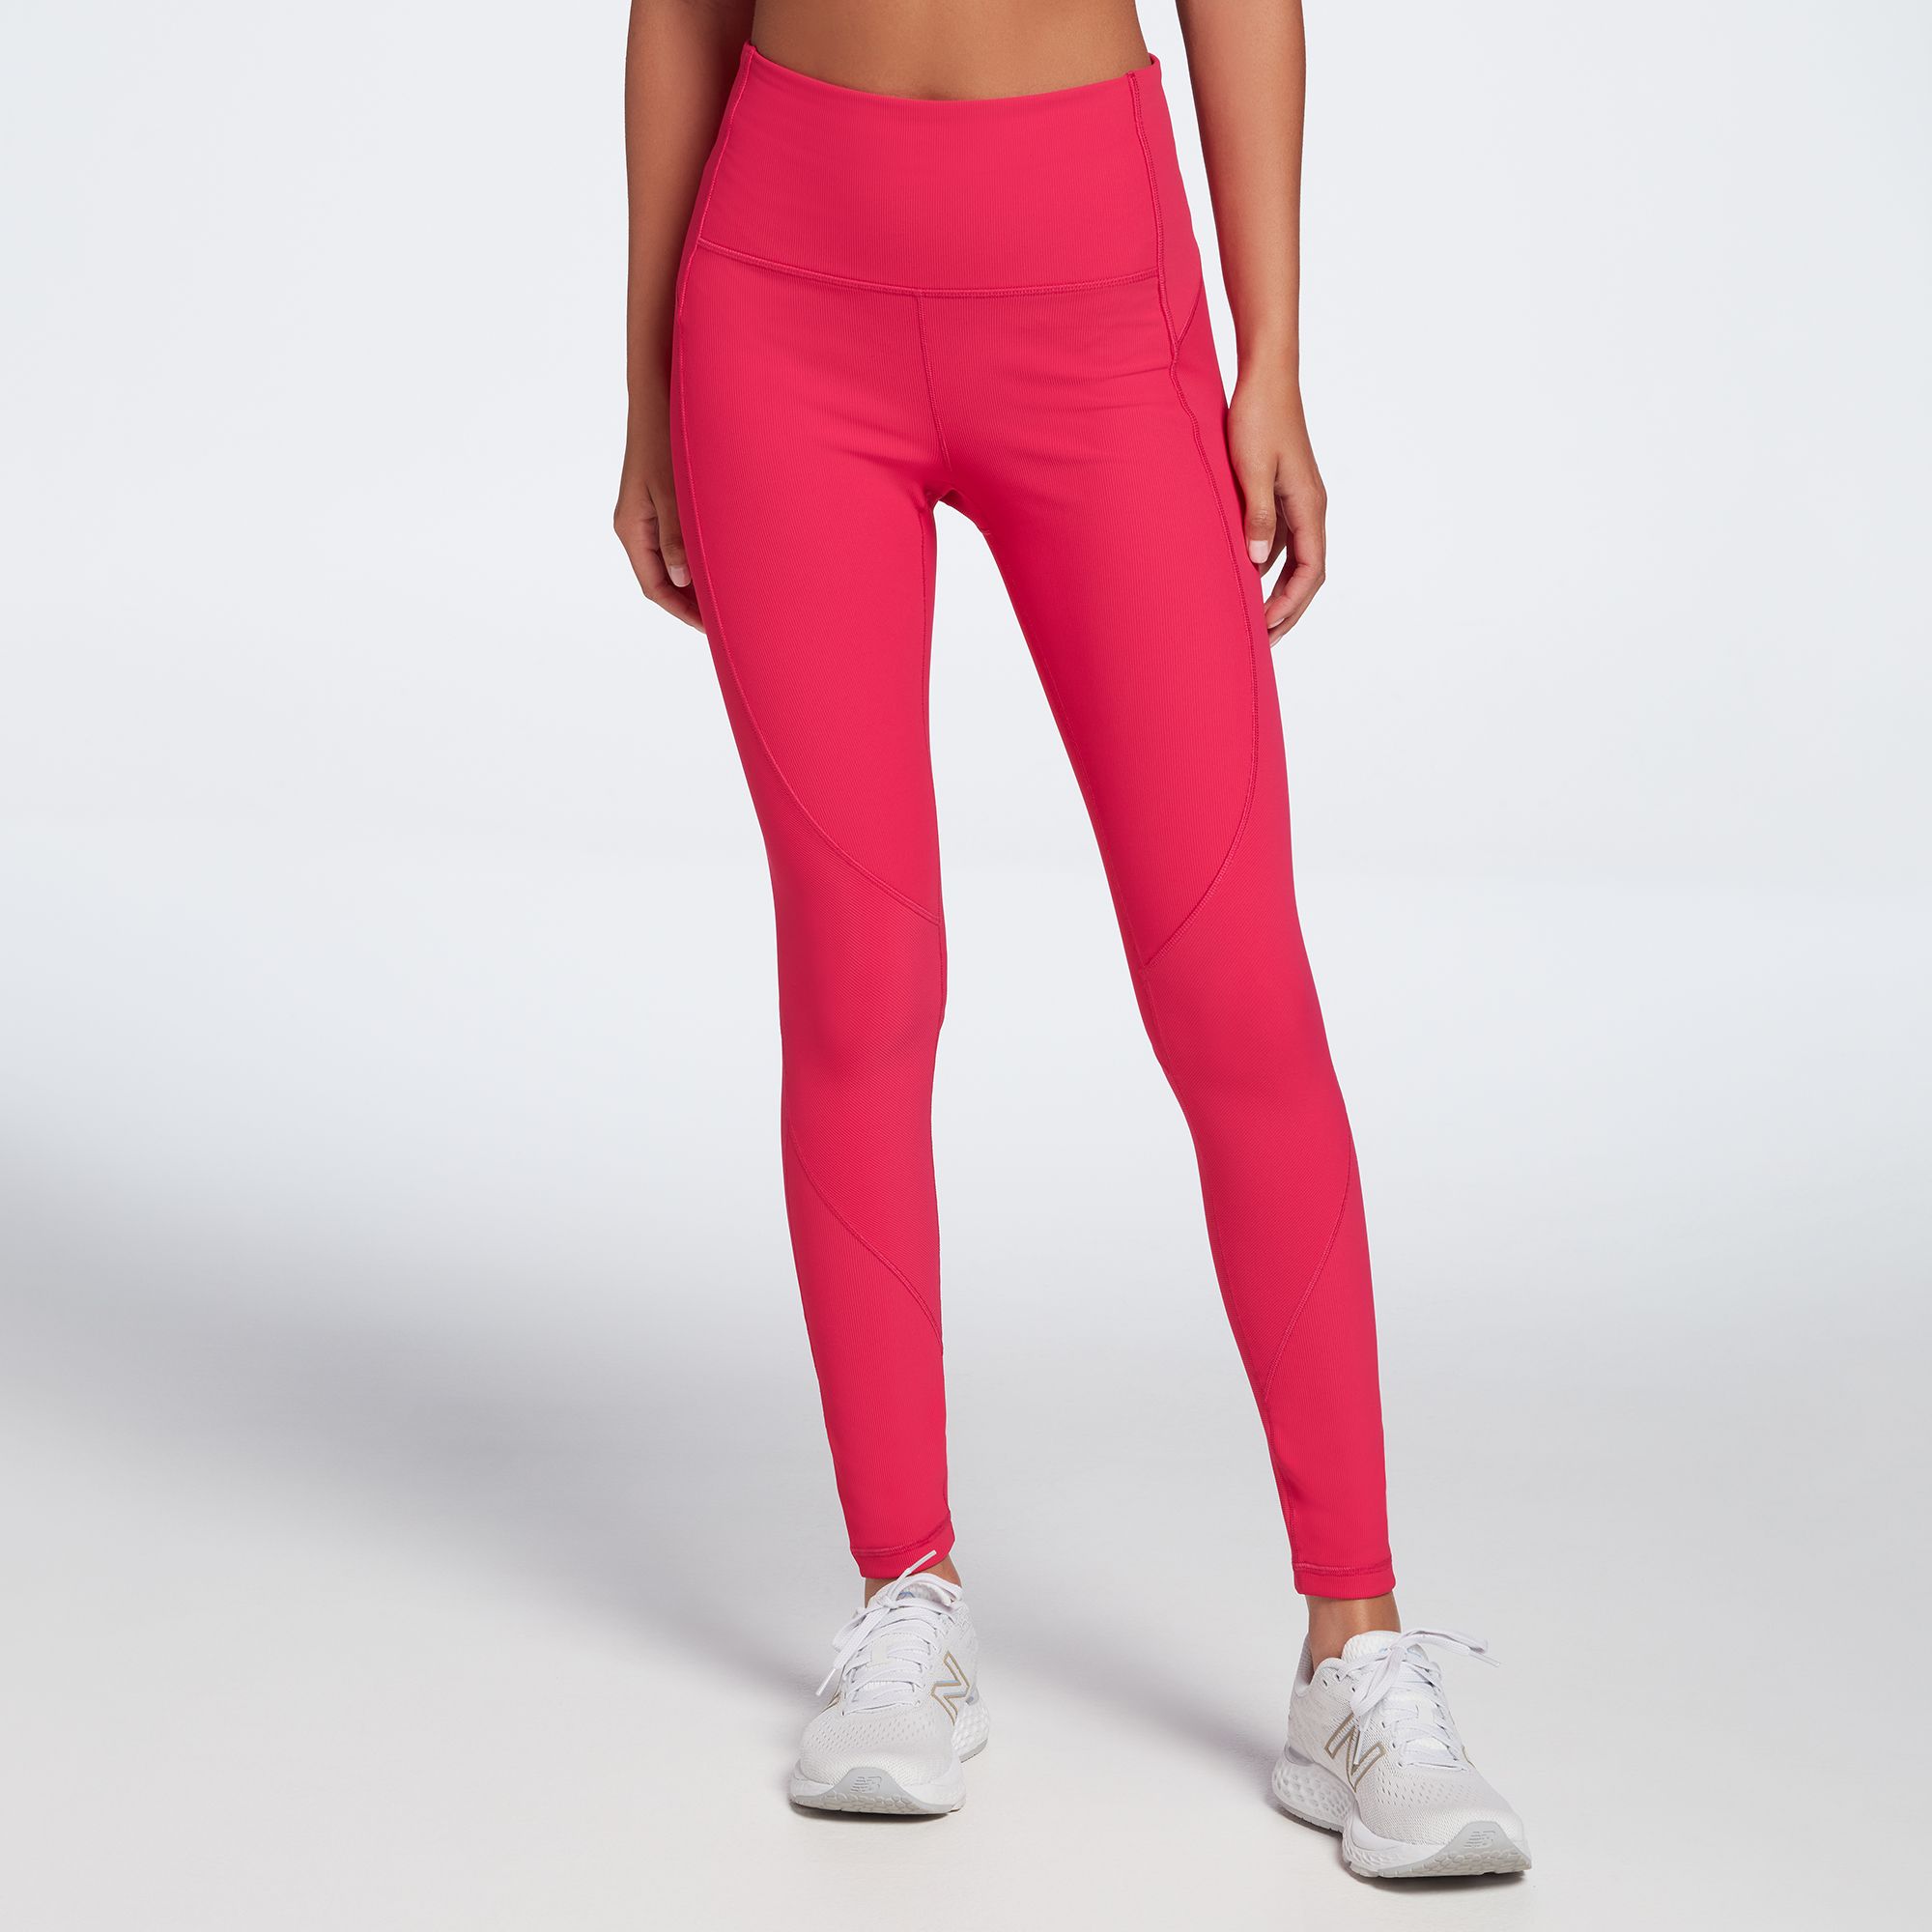 Calia / Women's Mixed Rib Essentials 7/8 Length Pants